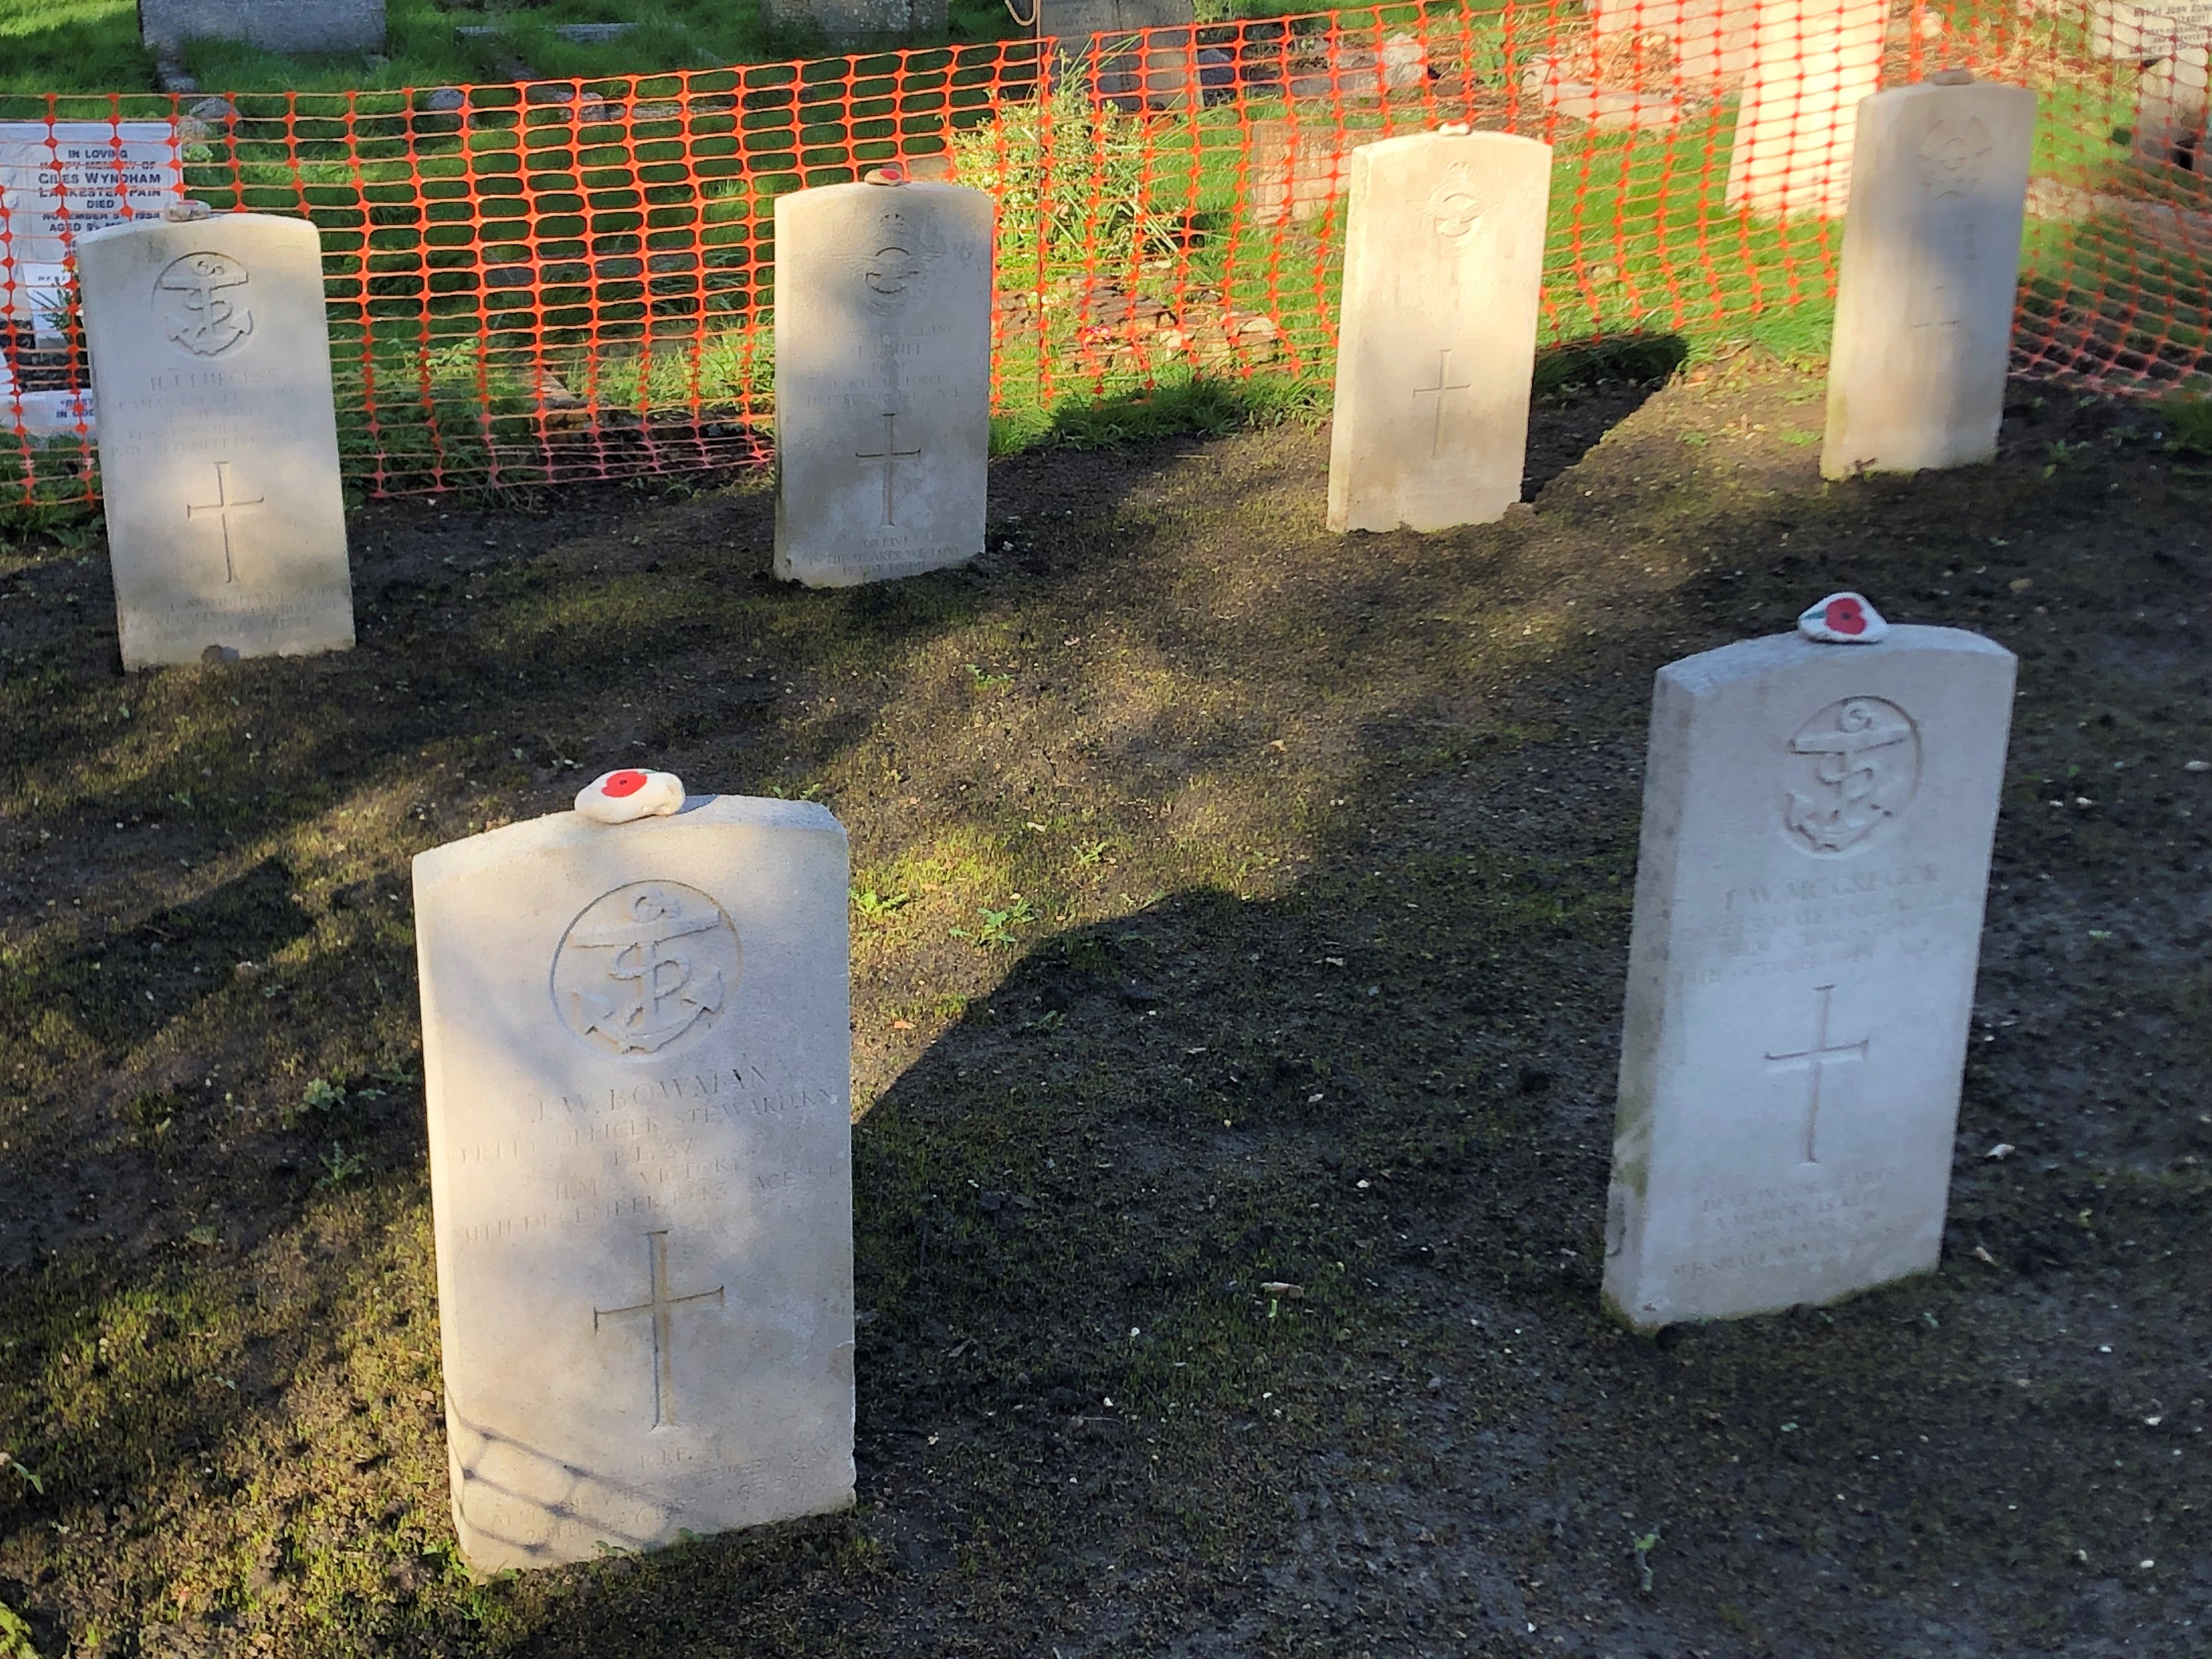 Covers Bognor Regis helps Felpham church tidy war memorial graves